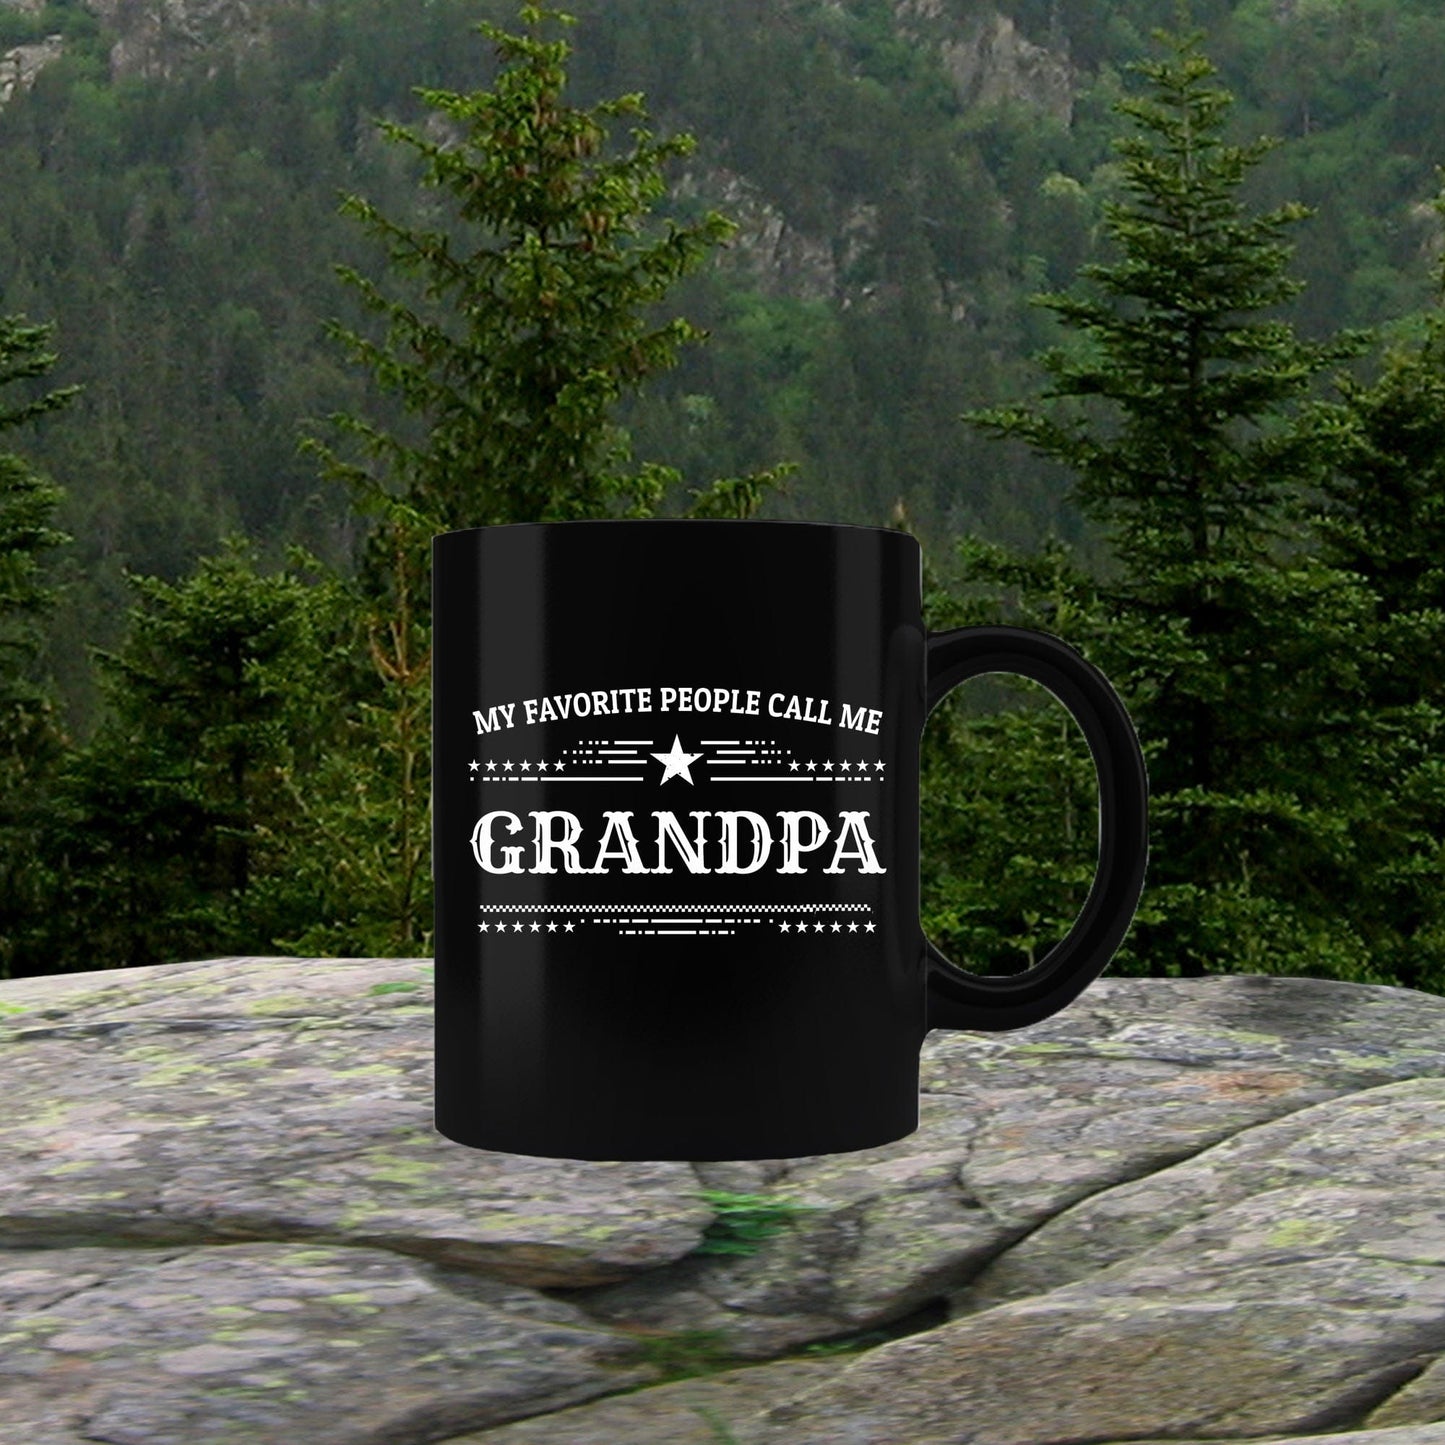 Grandpa Black Coffee Mug - Father's Day Gift